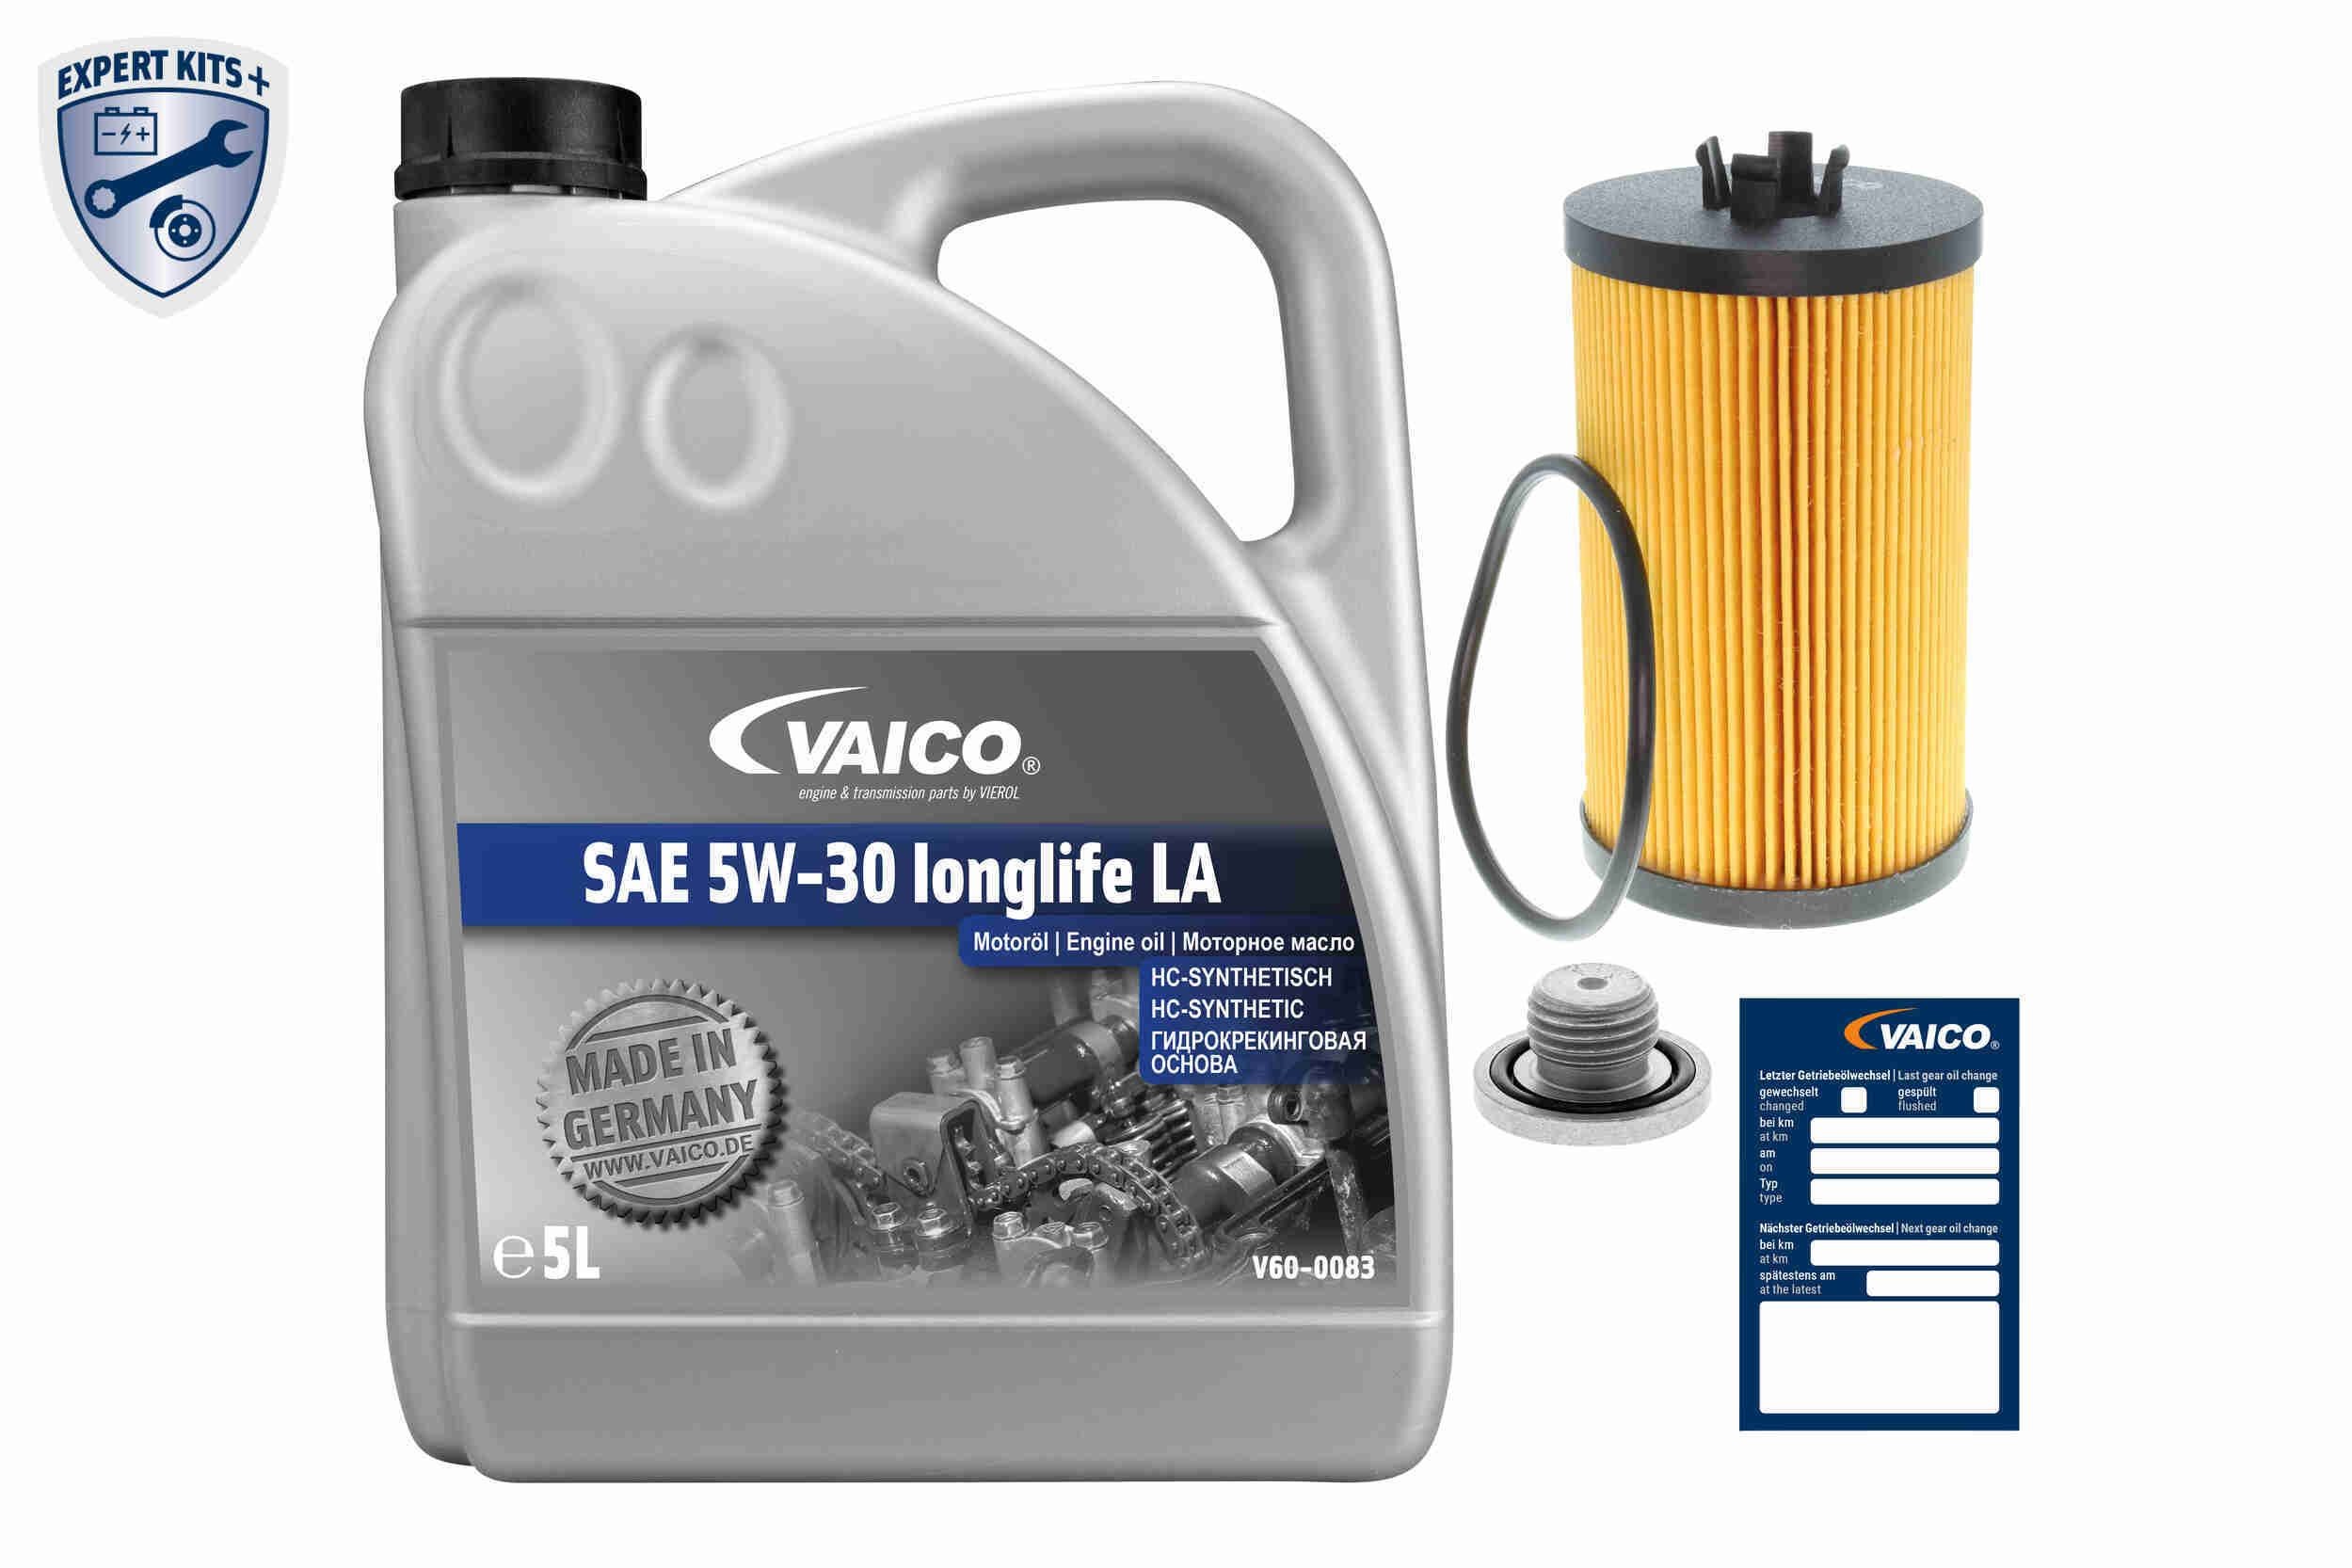 MB 229.52 VAICO V60-3002 Kit tagliando e kit filtri comprare